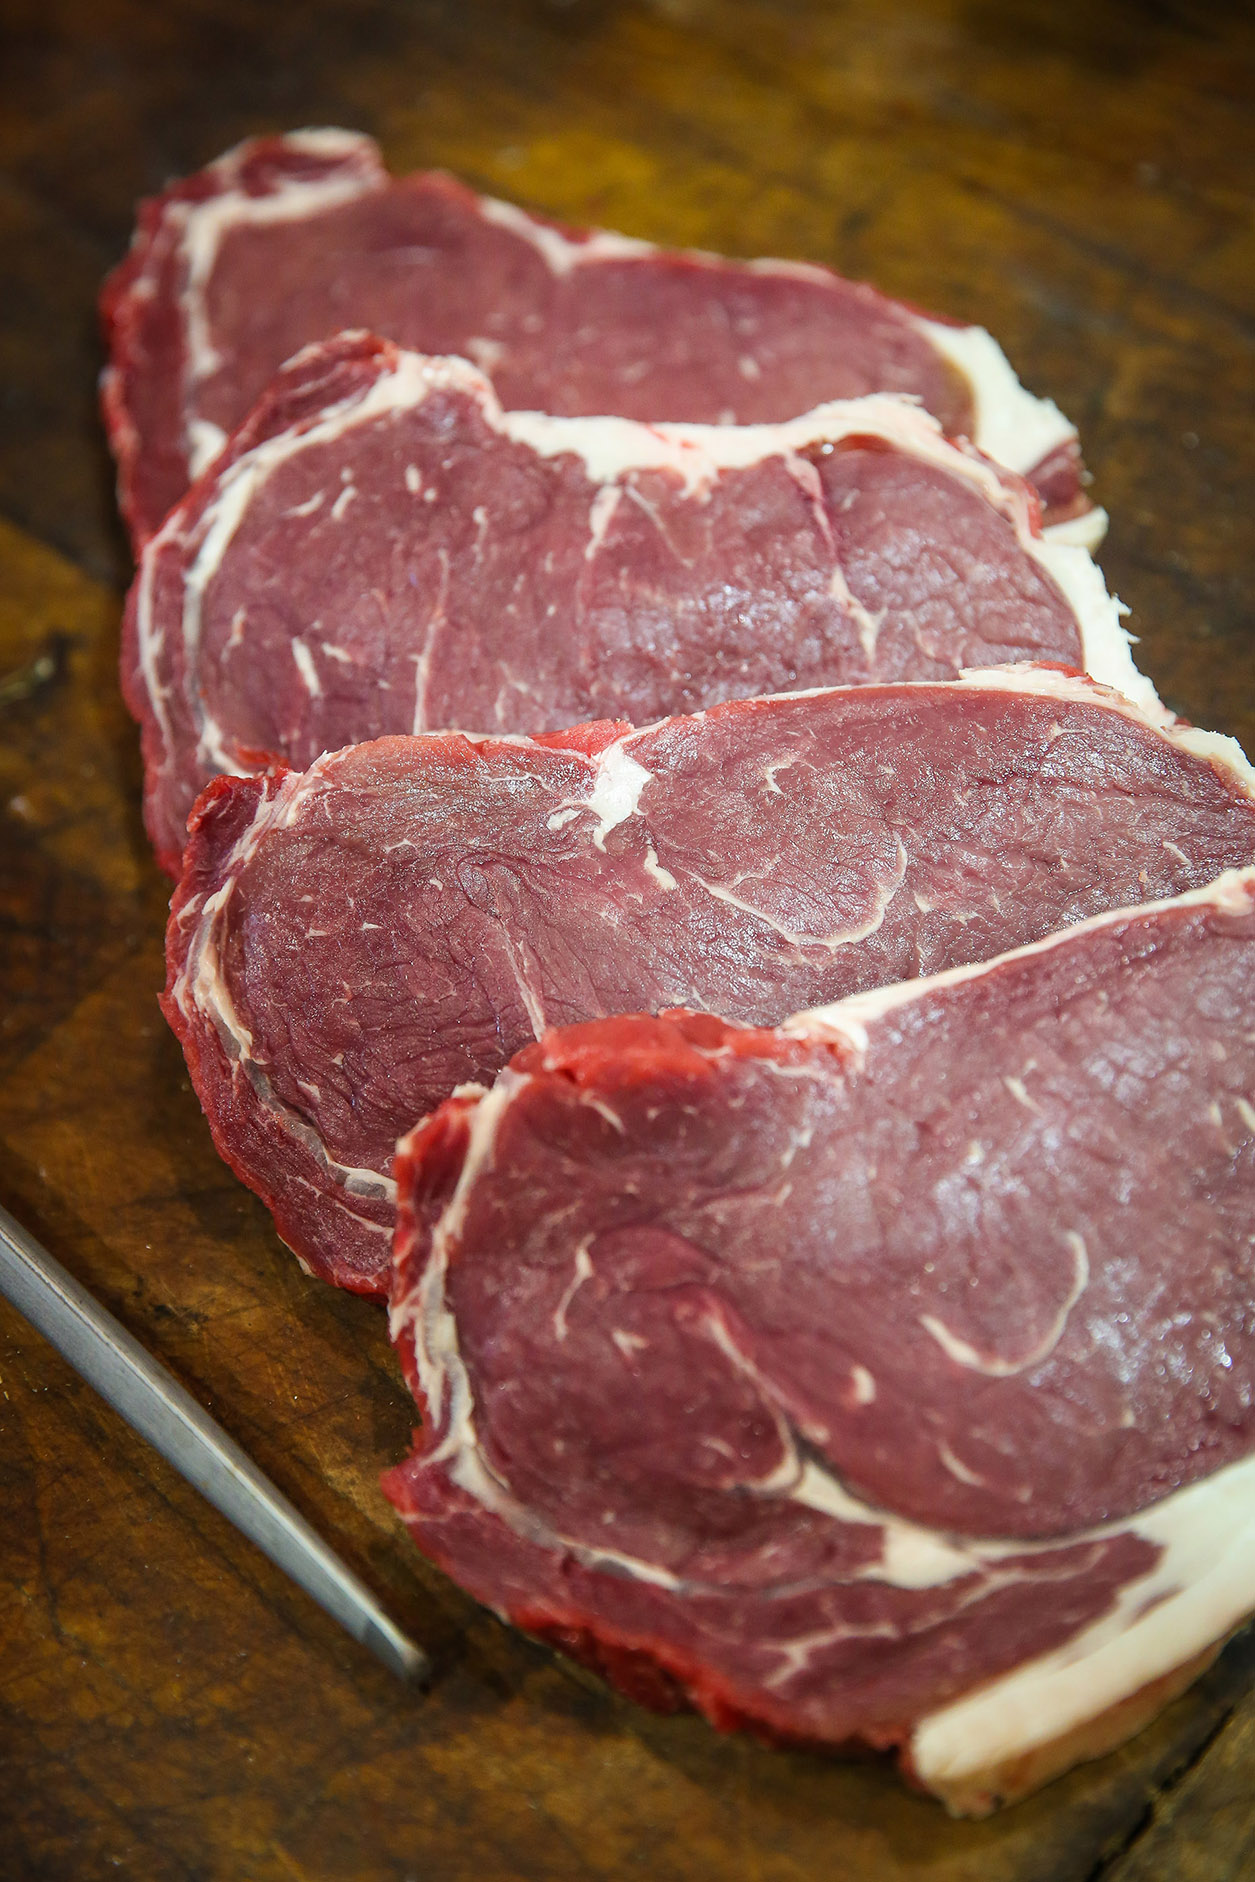 Four raw steak cuts by Ceri Oakes